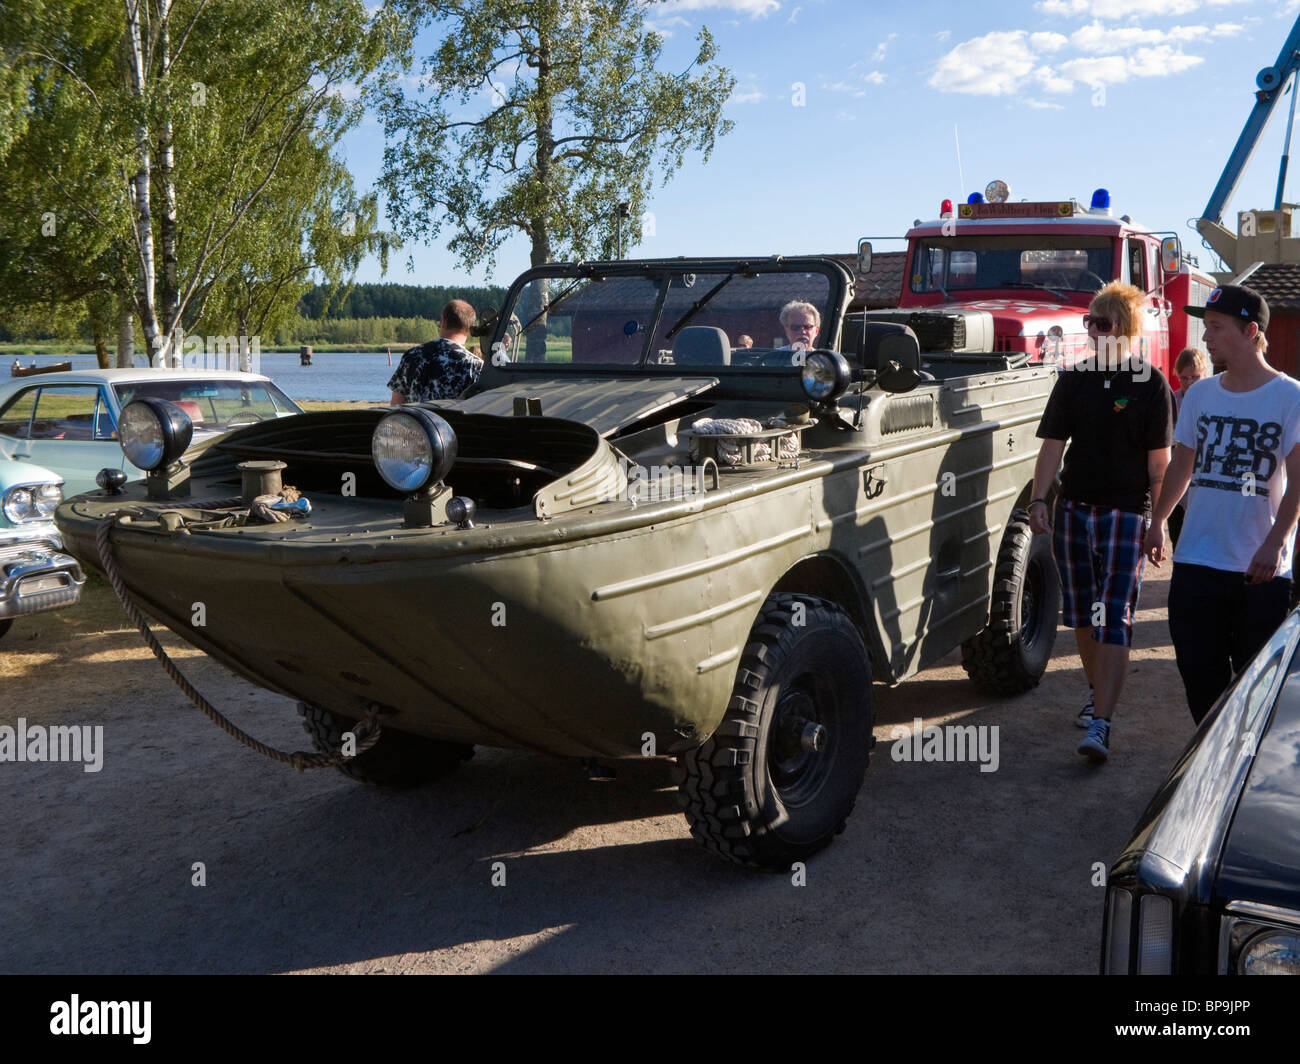 Amphibian vehicle, van run as a car or a boat. Stock Photo